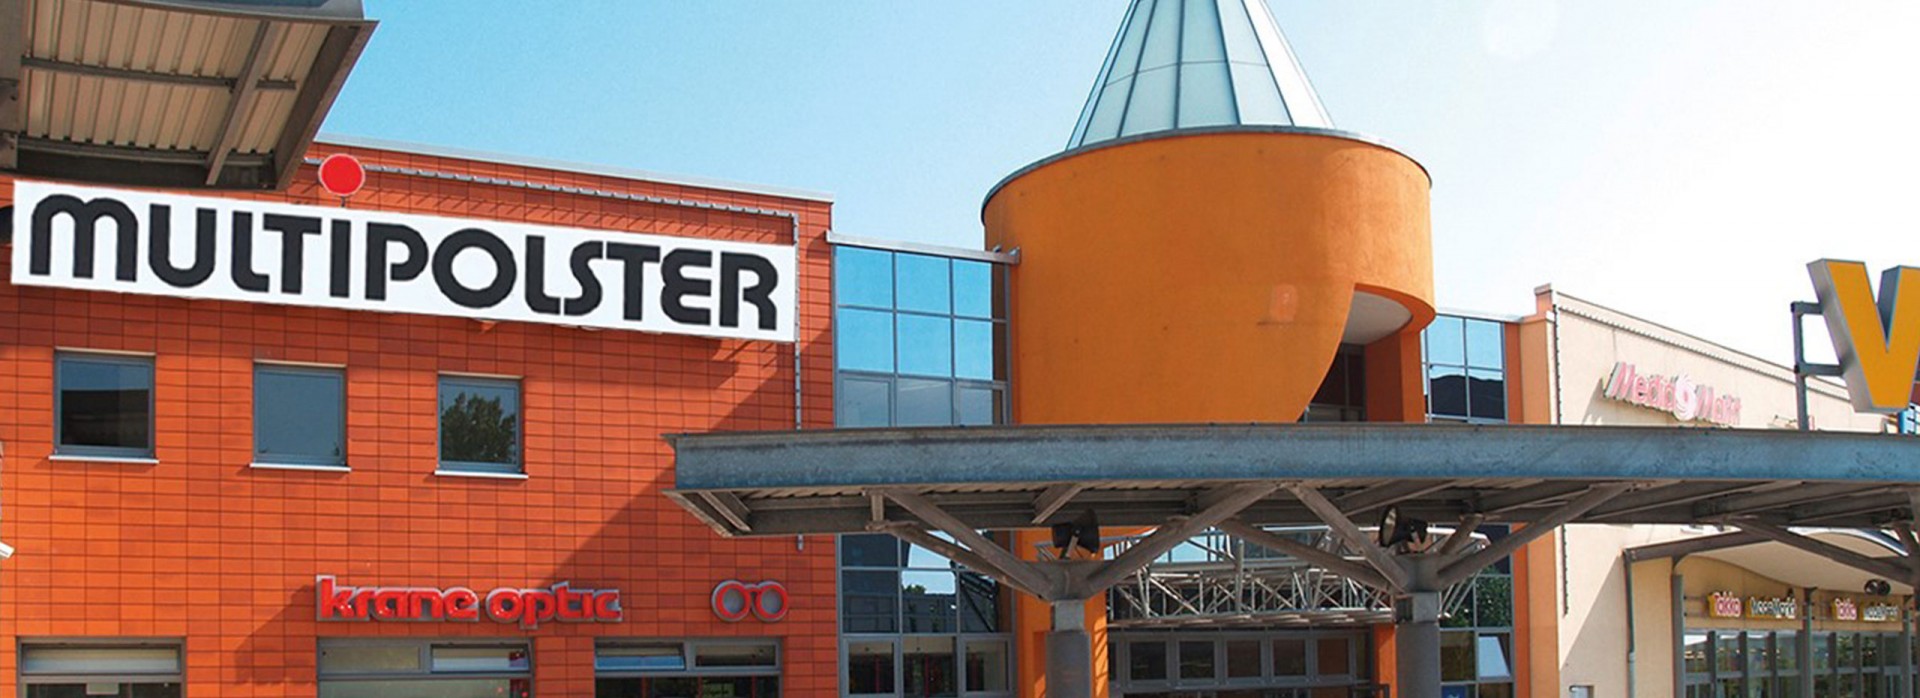 Multipolster -  Chemnitz-Vita-Center, Wladimir-Sagorski-Straße 22 in Chemnitz